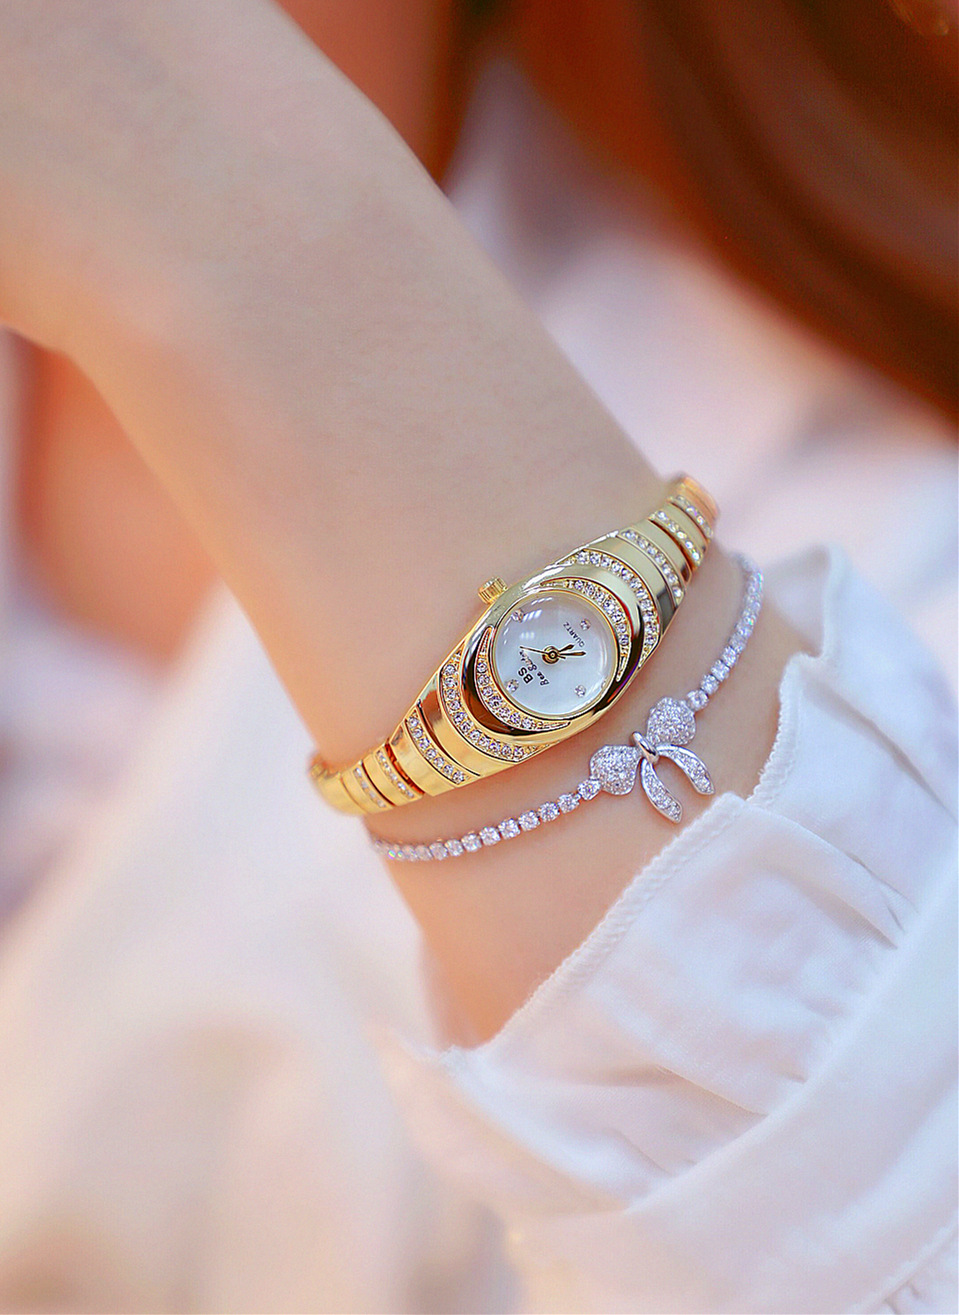 Womens Heart Lock Magni Charm Bracelet Watch Rinestone Studded Alloy Wrist  Jewelry From Muju, $10.12 | DHgate.Com